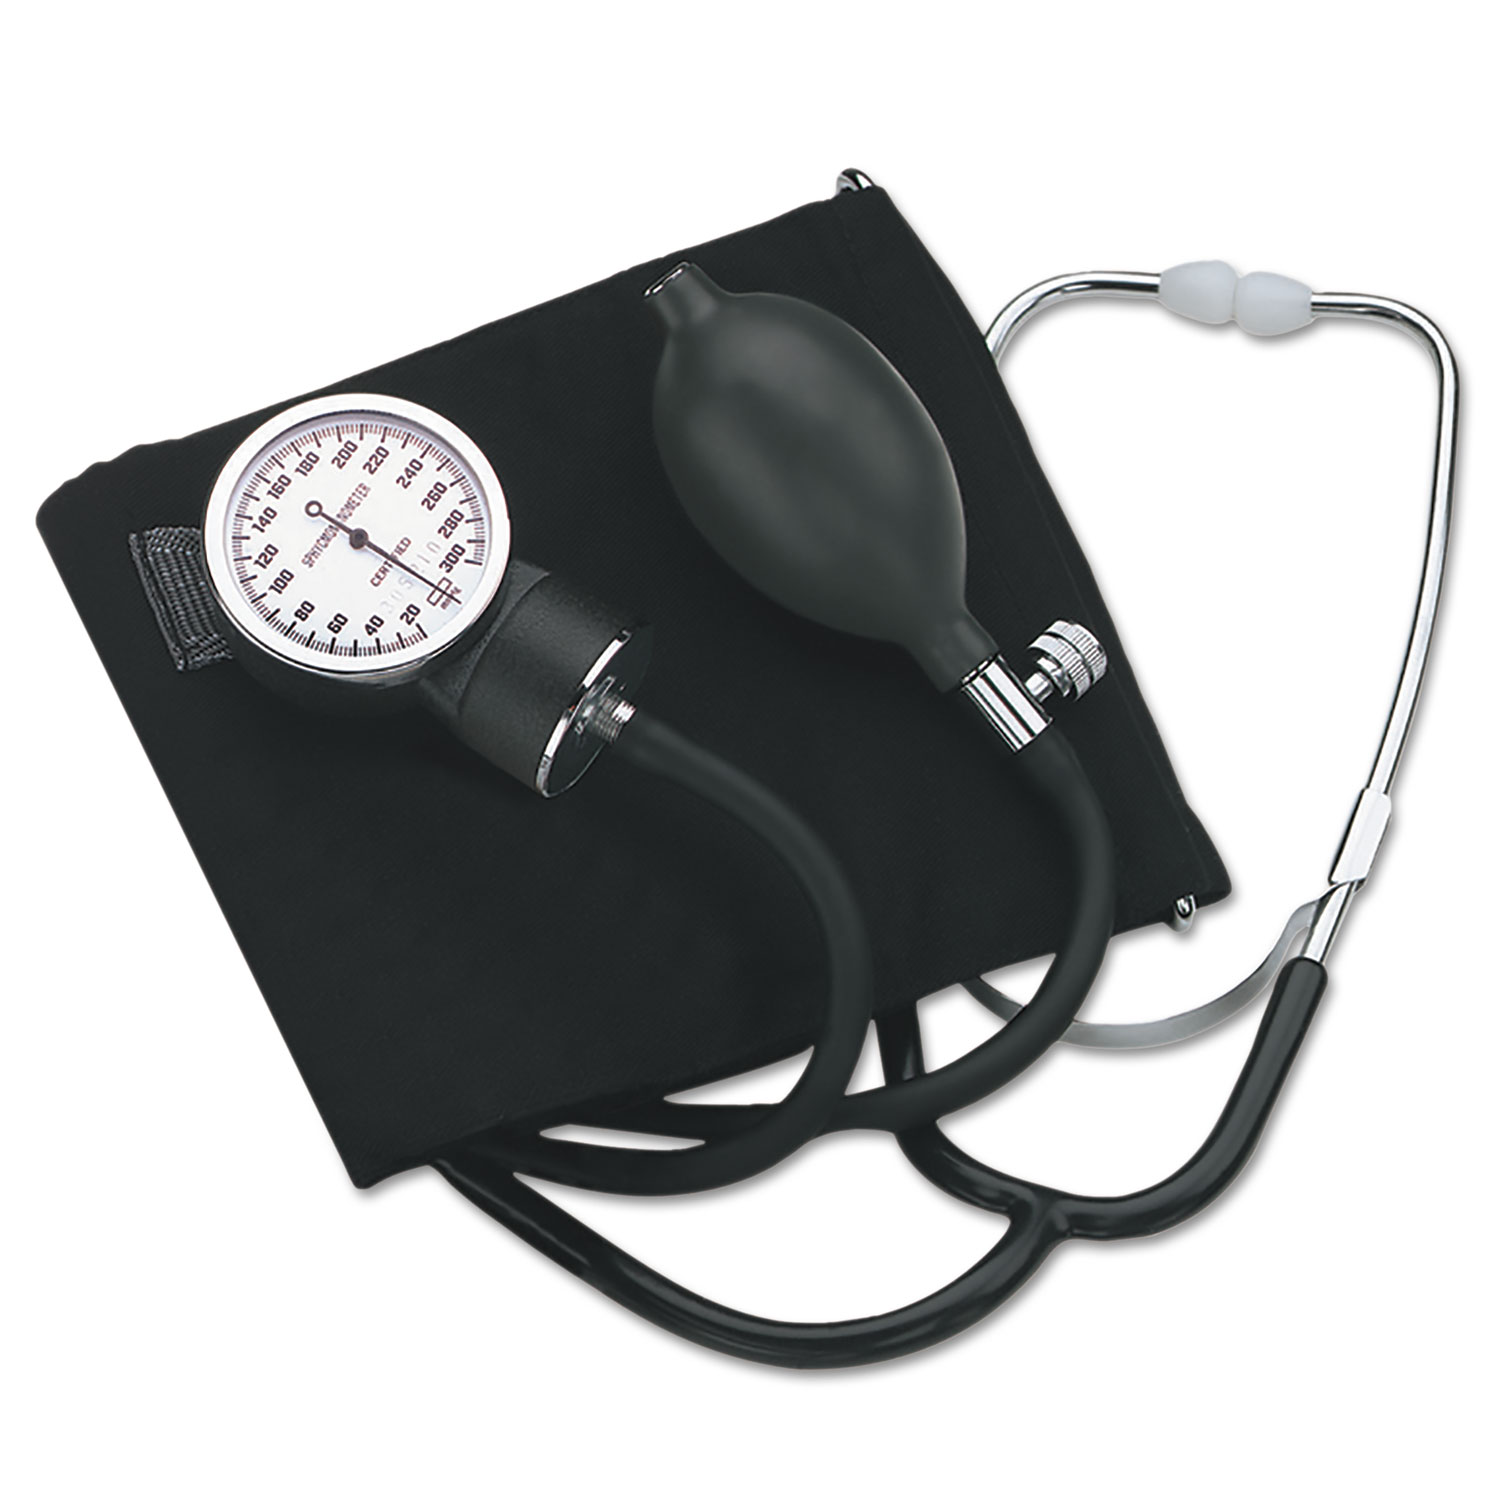 Self-Taking Home Blood Pressure Kit, 22 Stethoscope, Large Adult